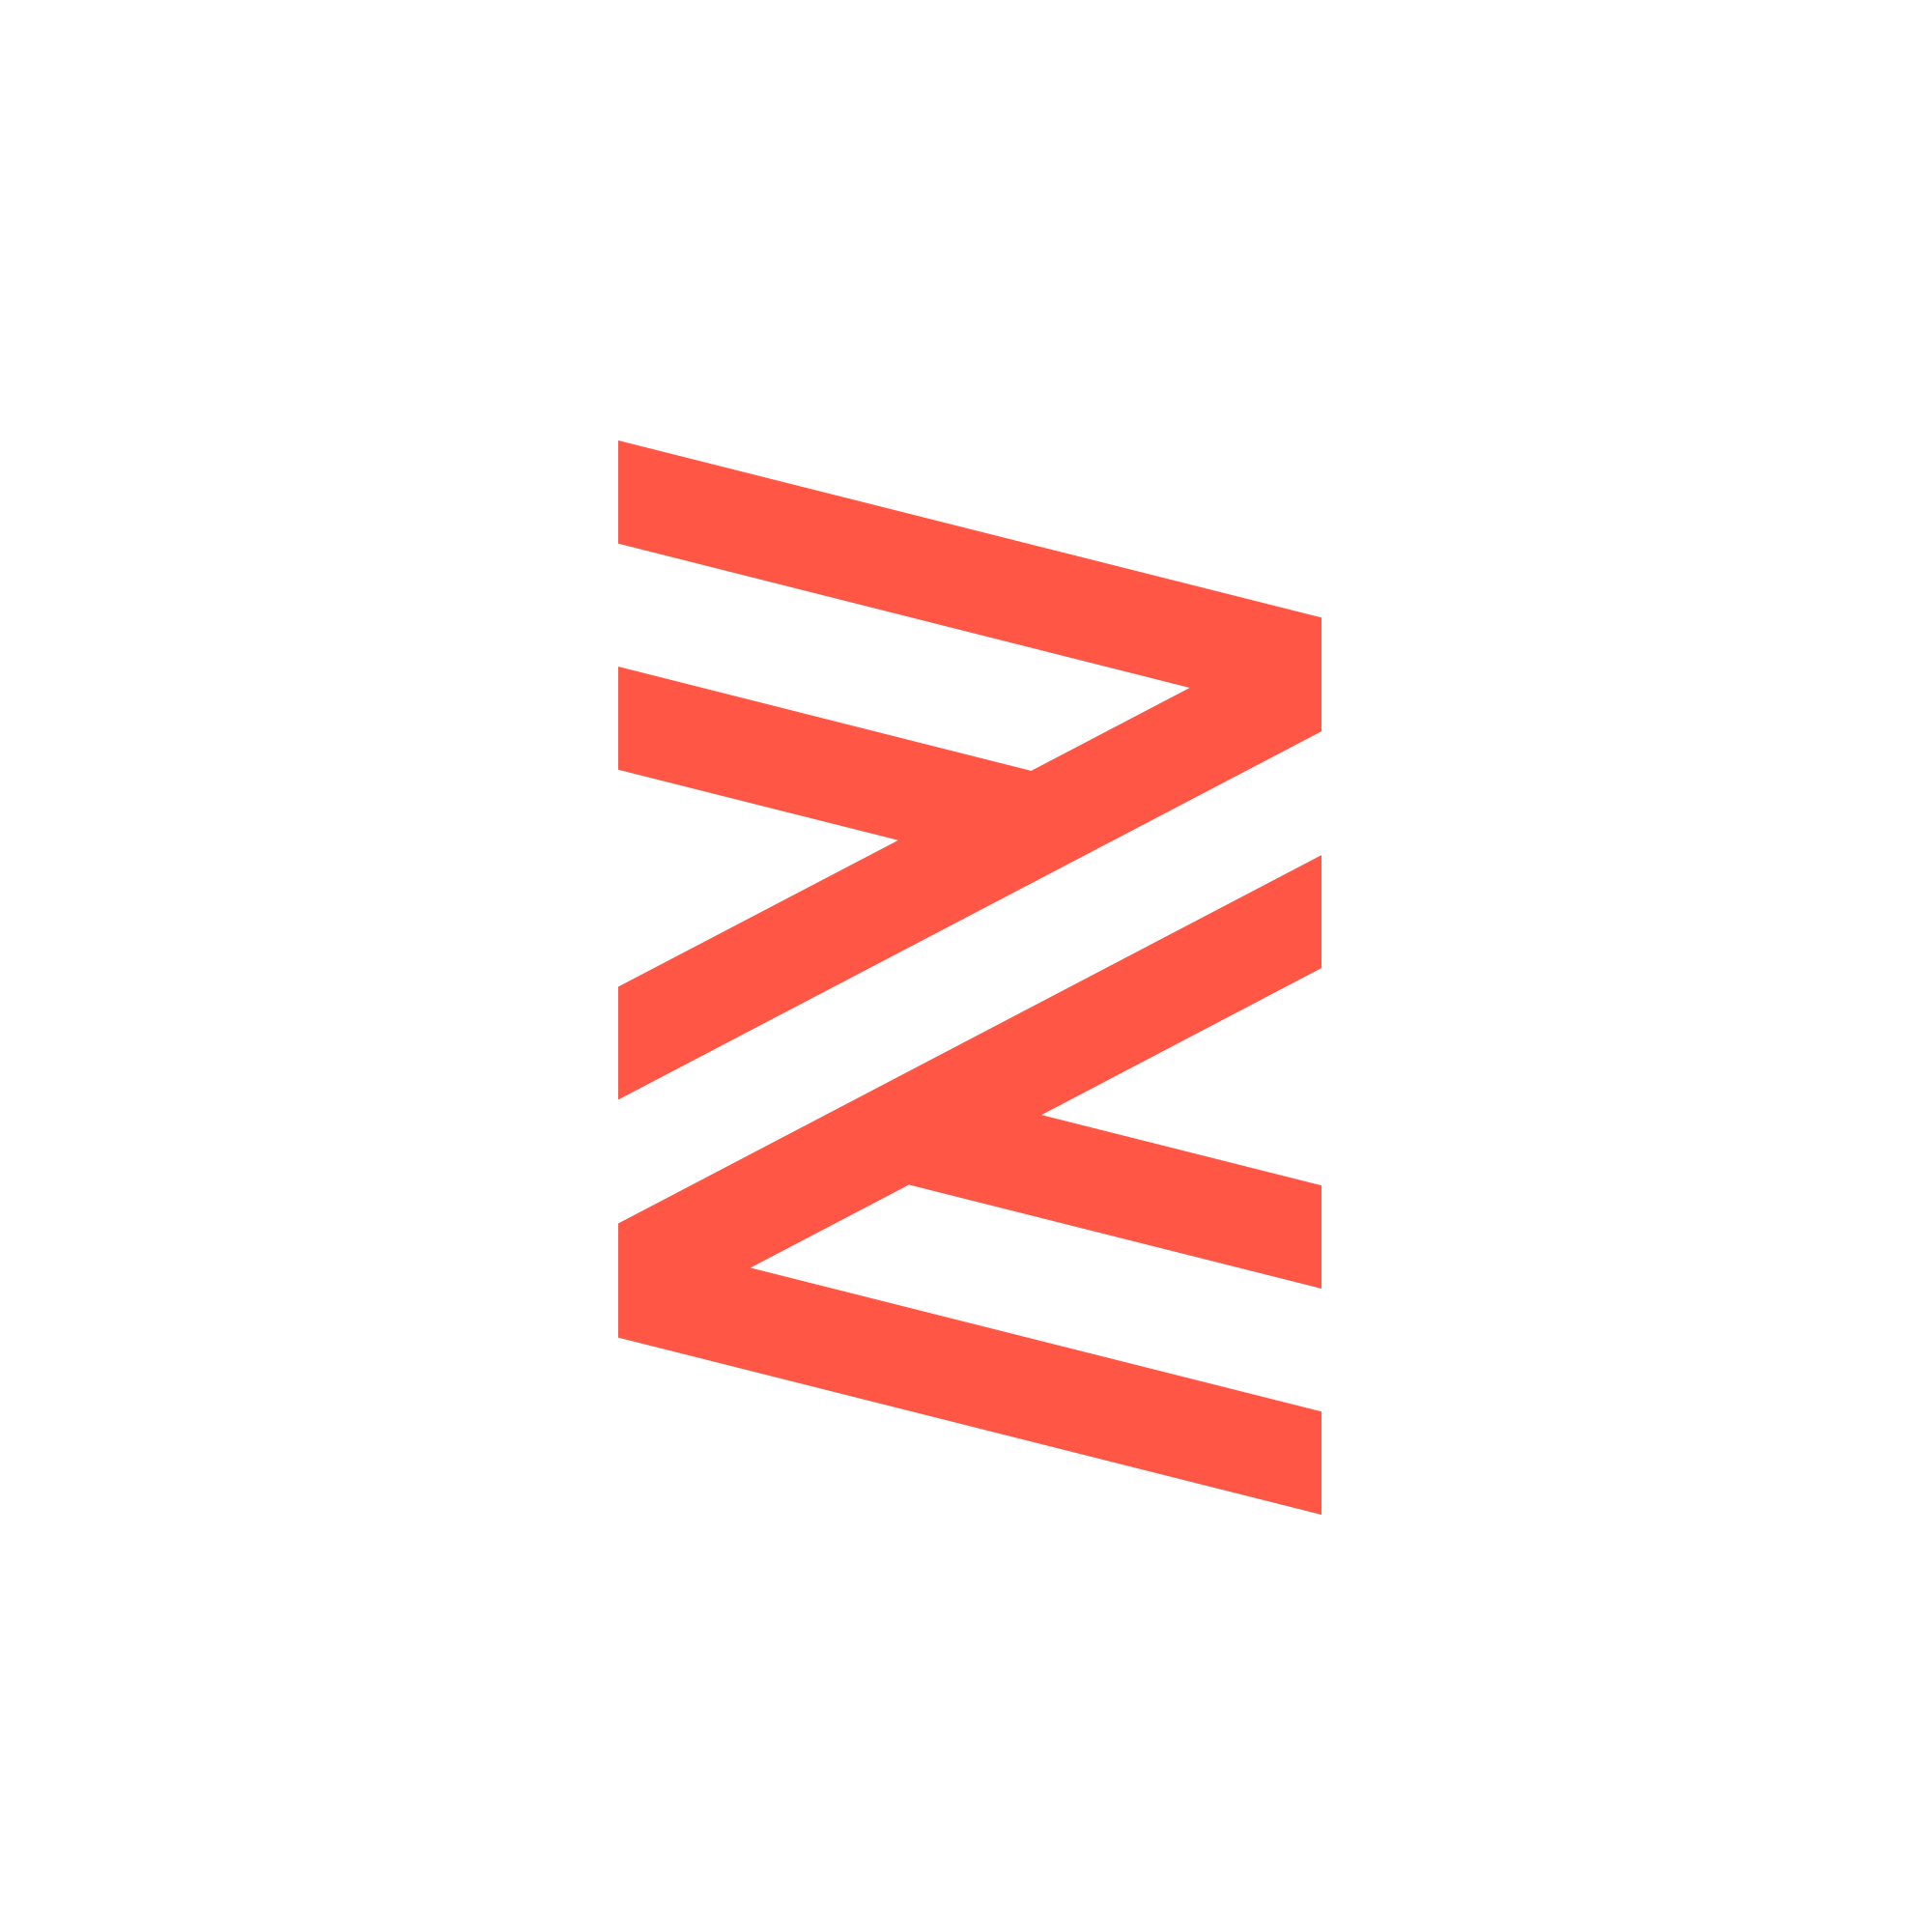 Zenefits logo